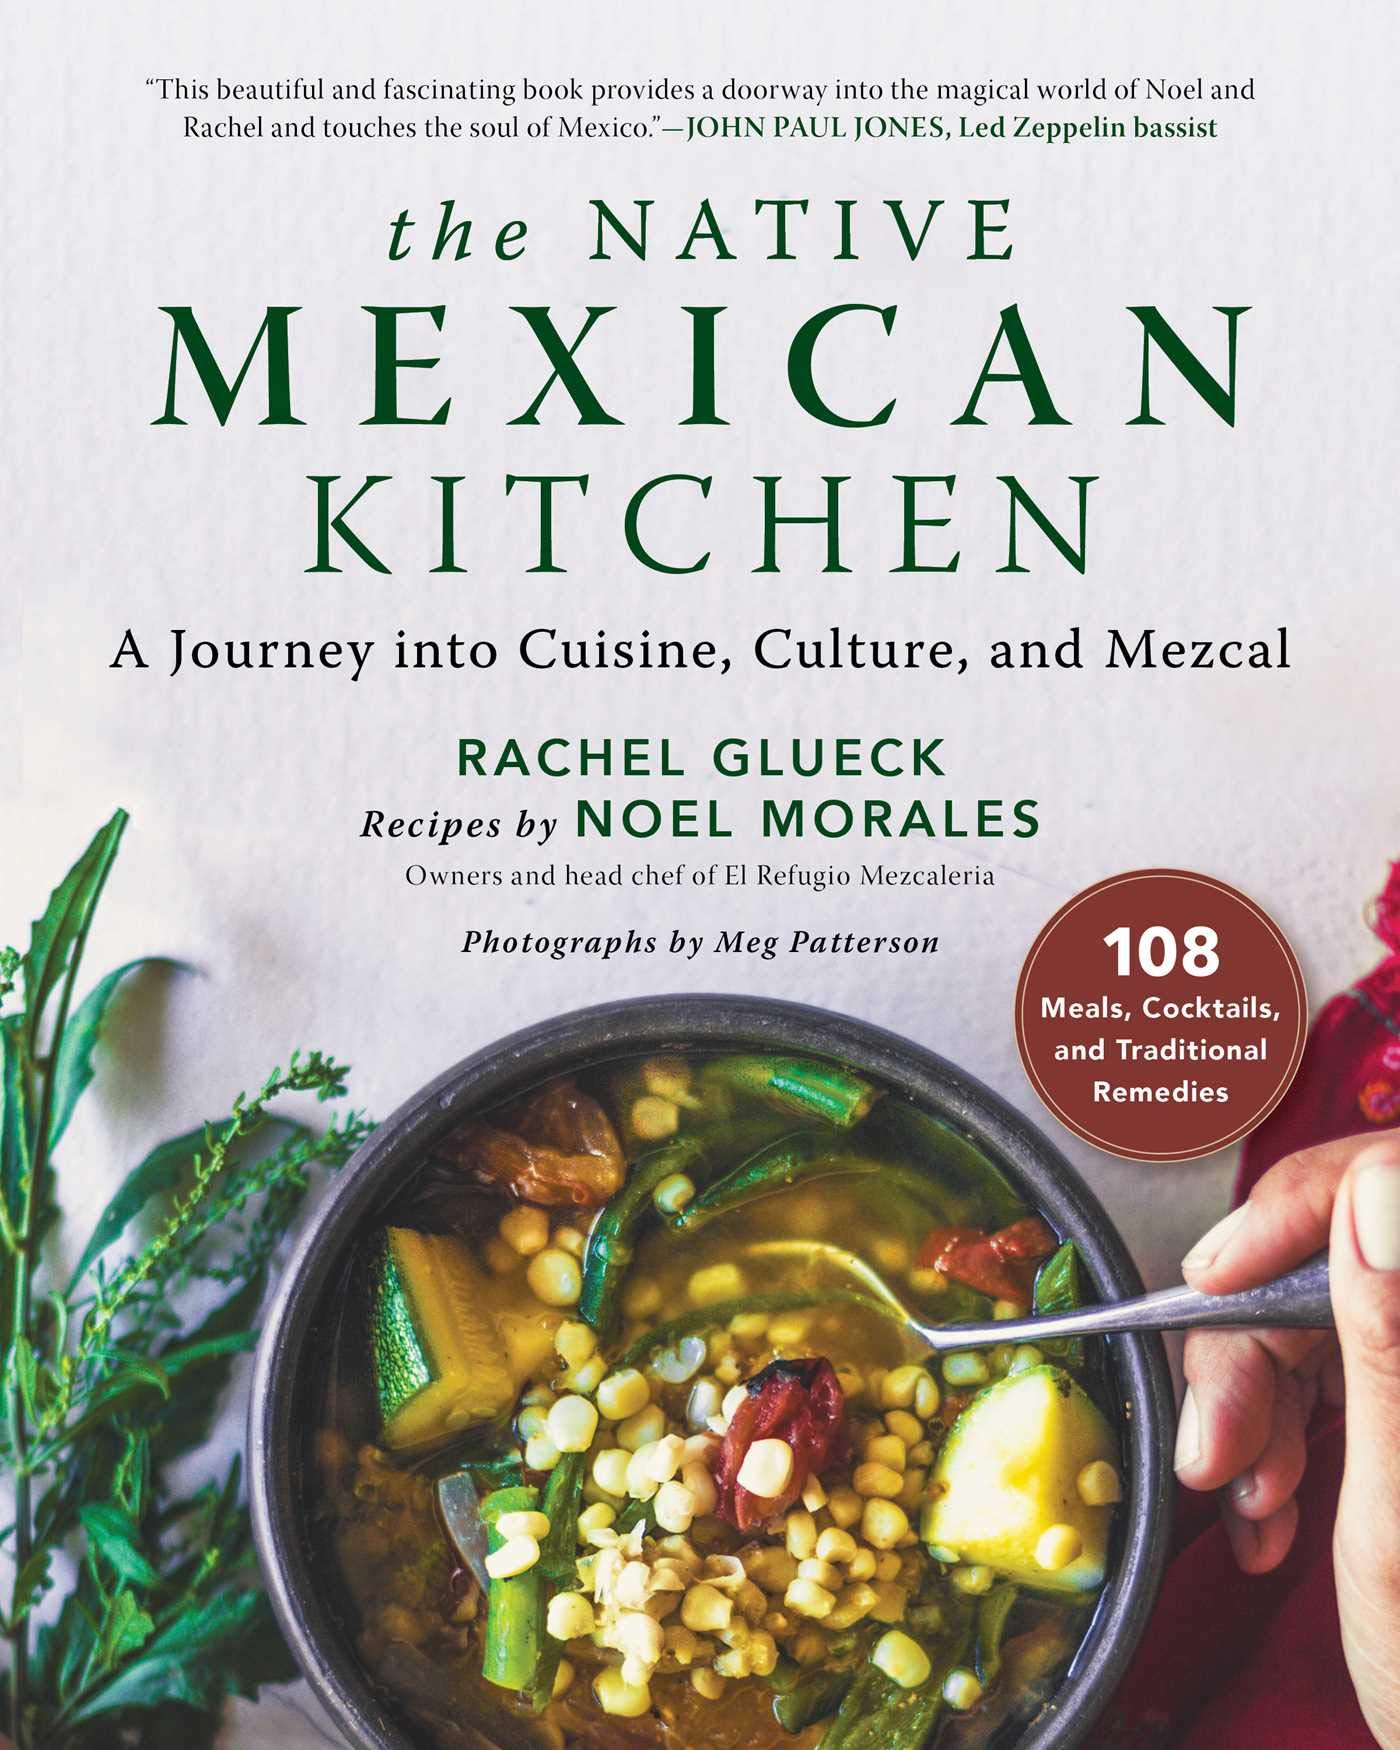 The Native Mexican Kitchen: A Journey into Cuisine, Culture, and Mezcal (Rachel Glueck, Noel Morales)